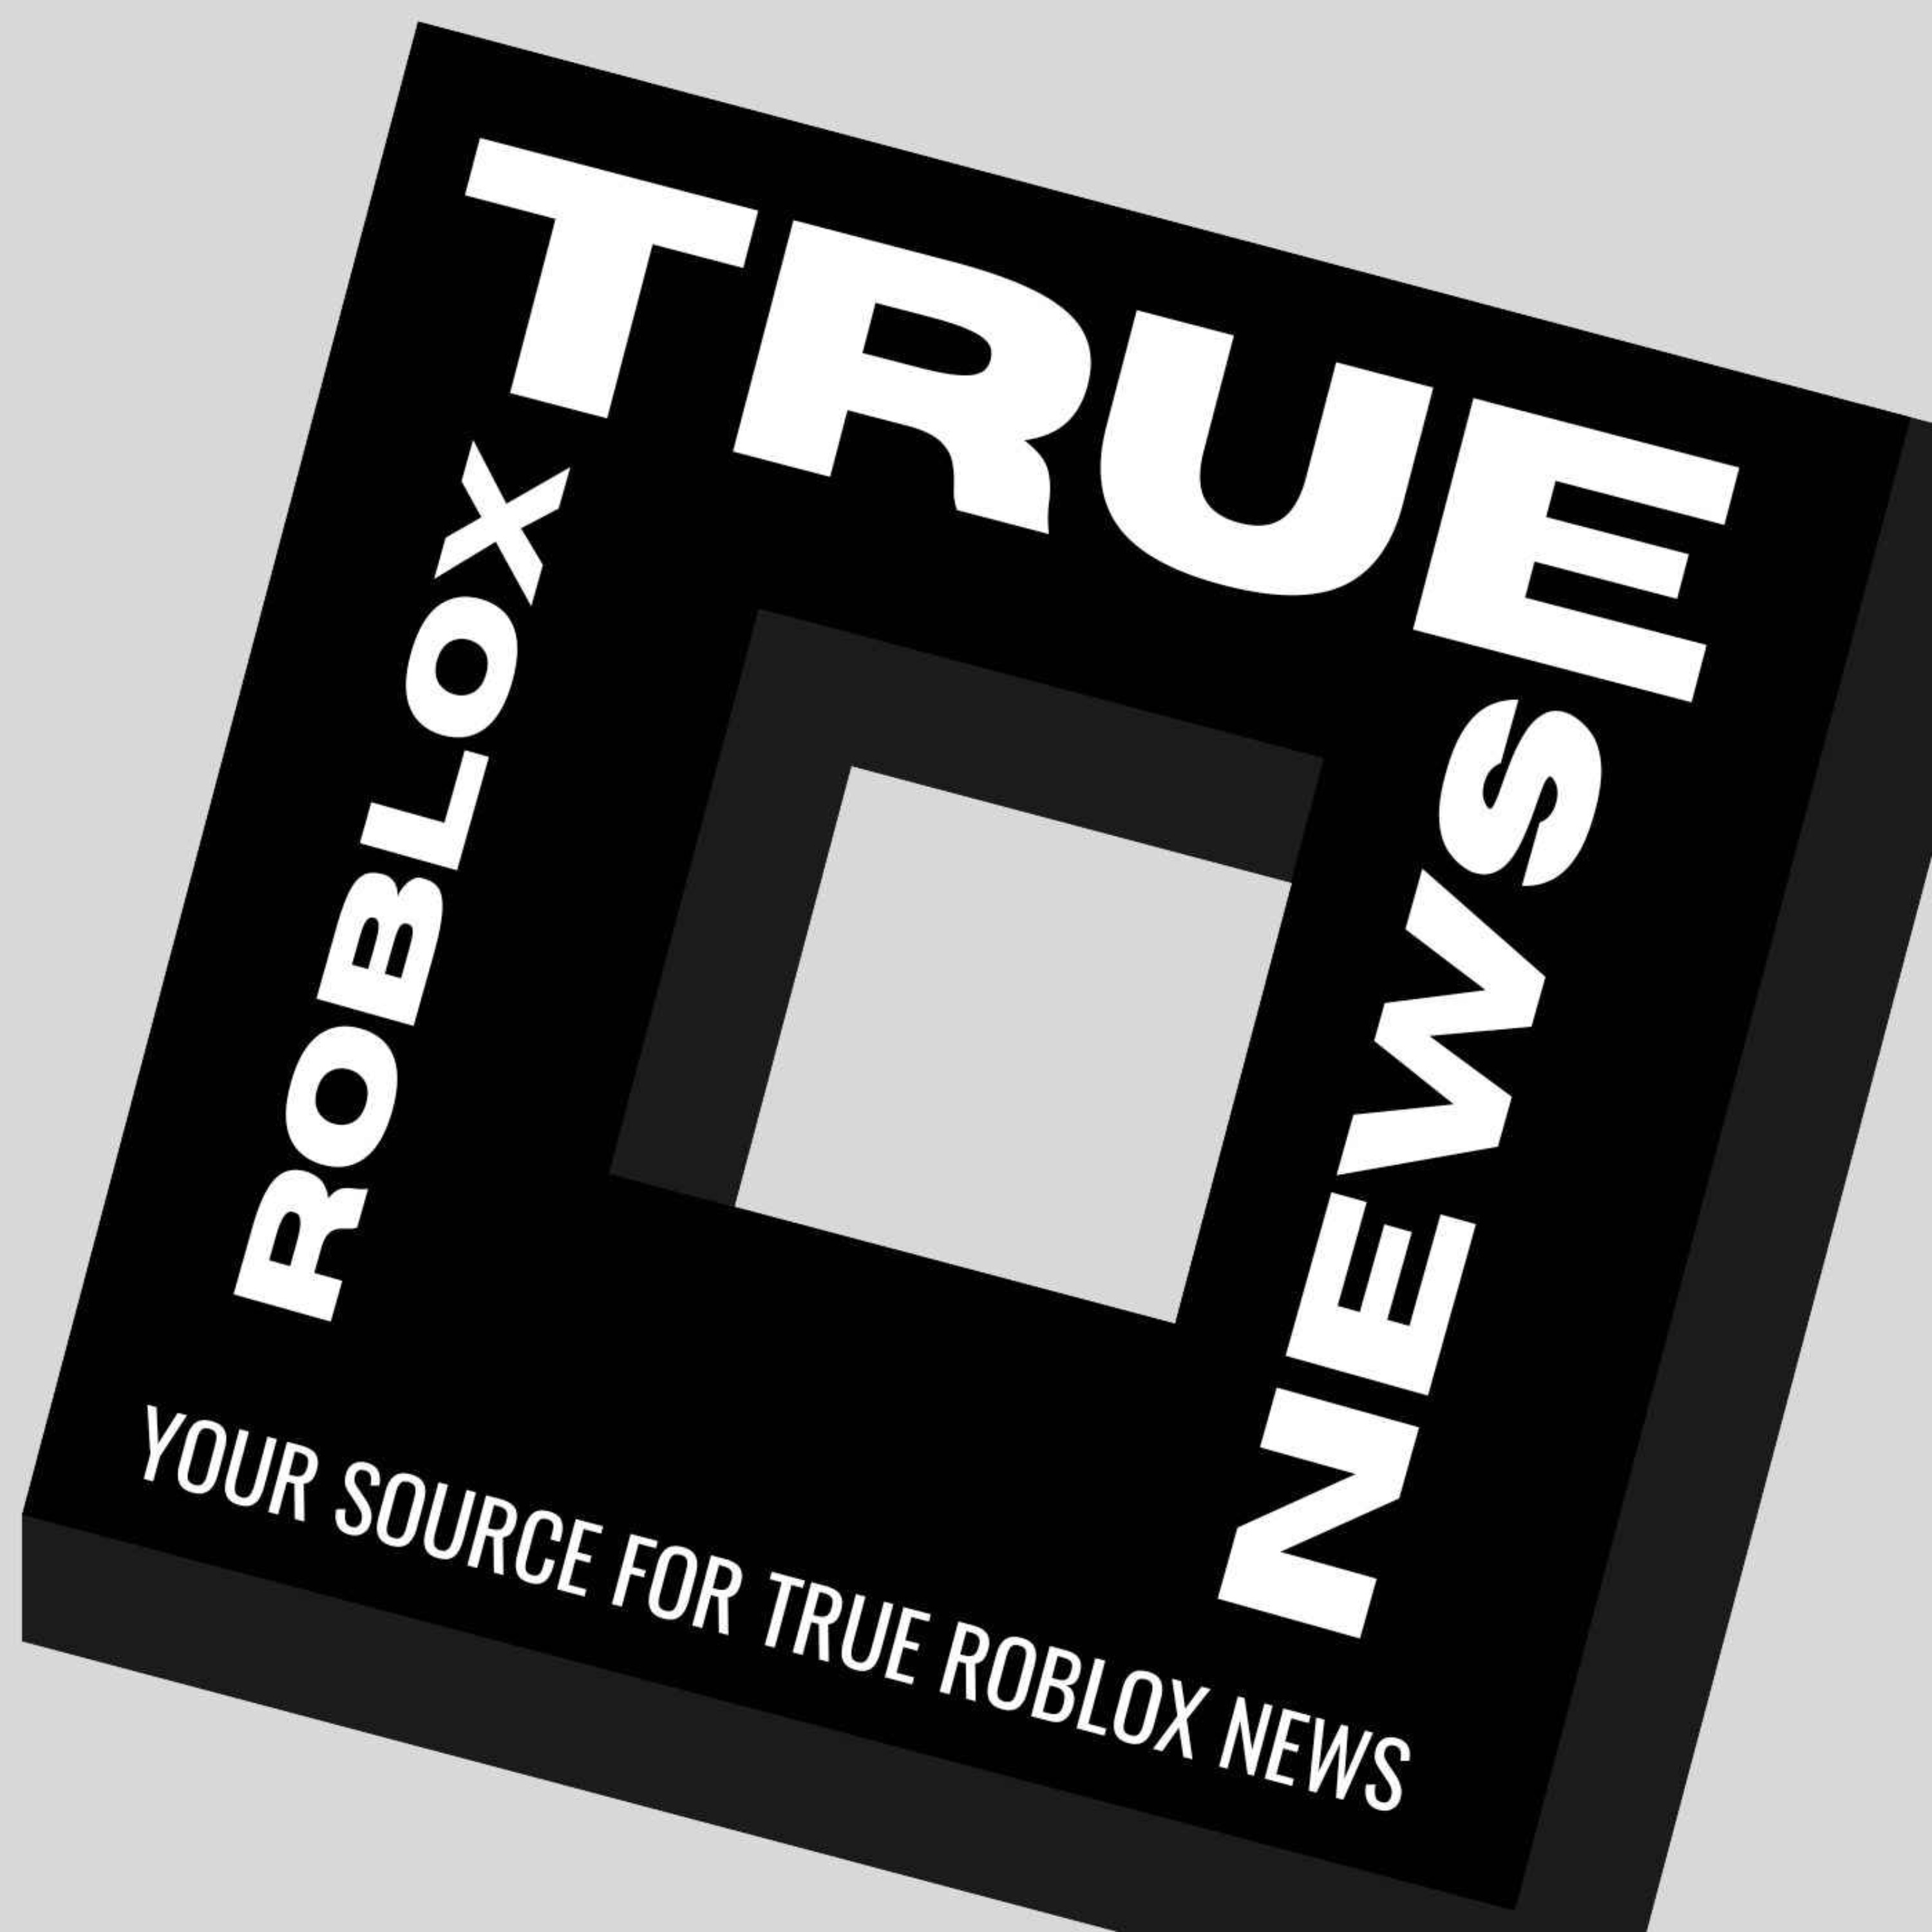 News - Roblox